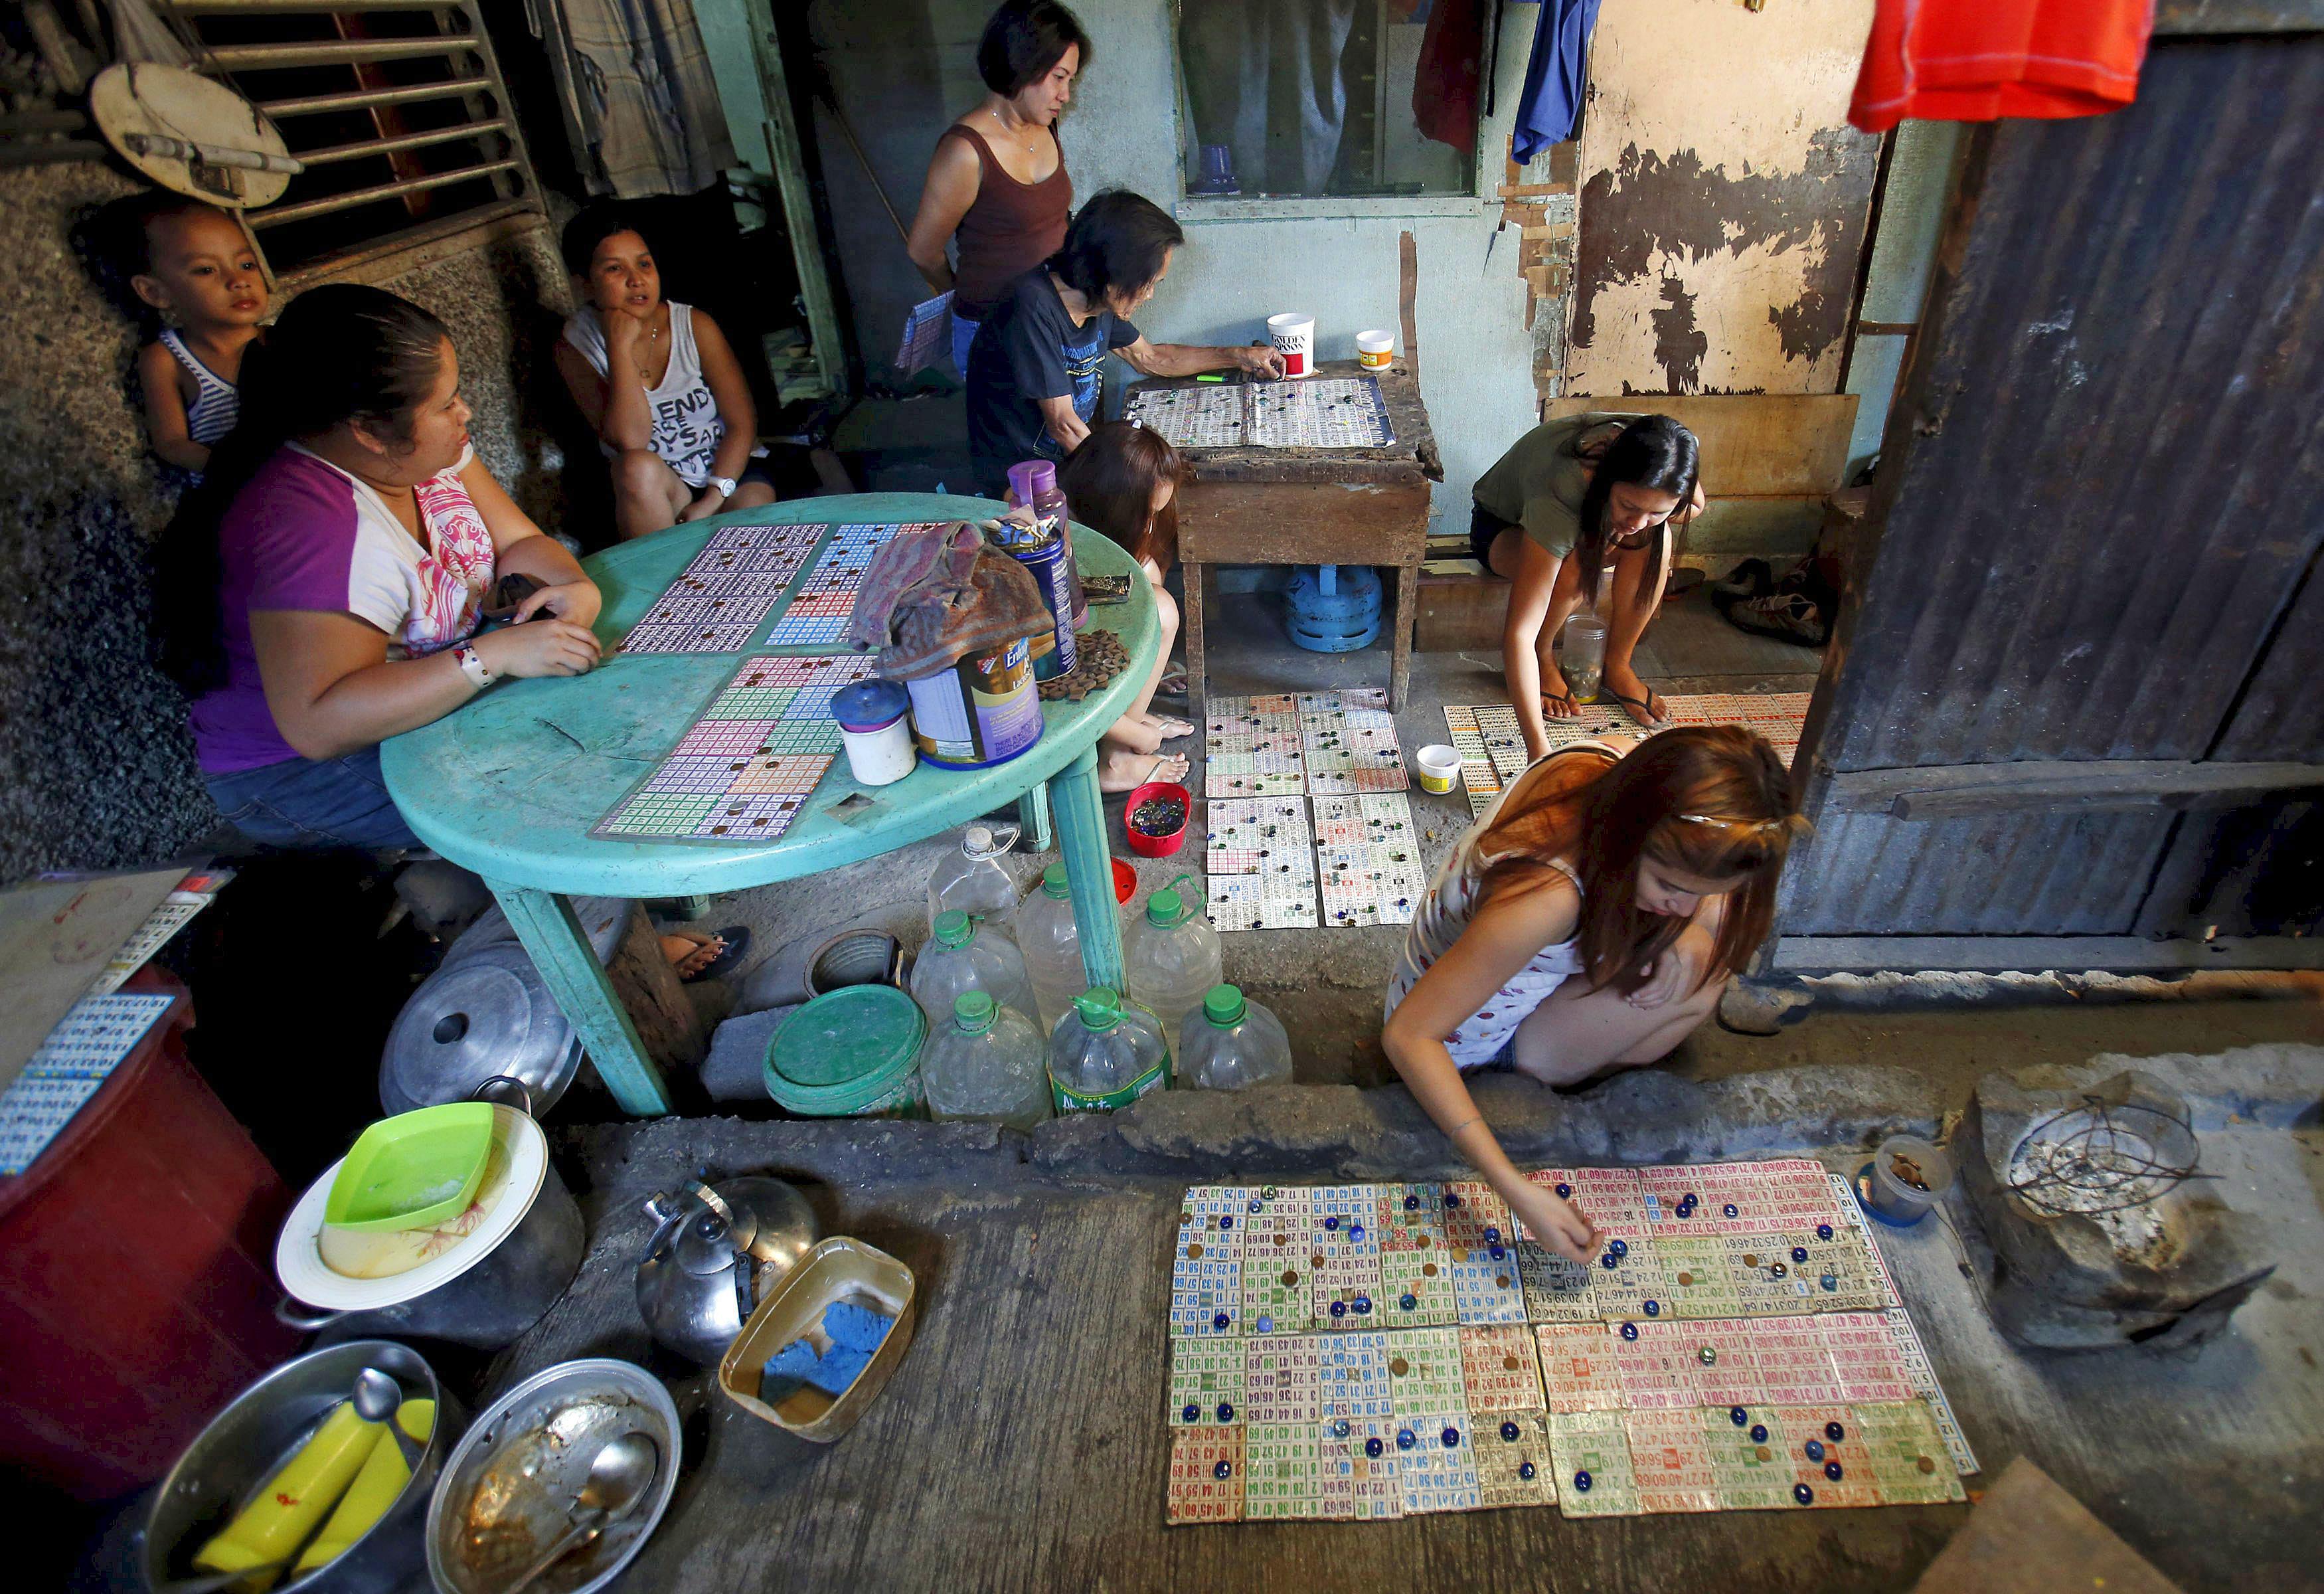 PHILIPPINES-GAMBLING/WIDERIMAGE